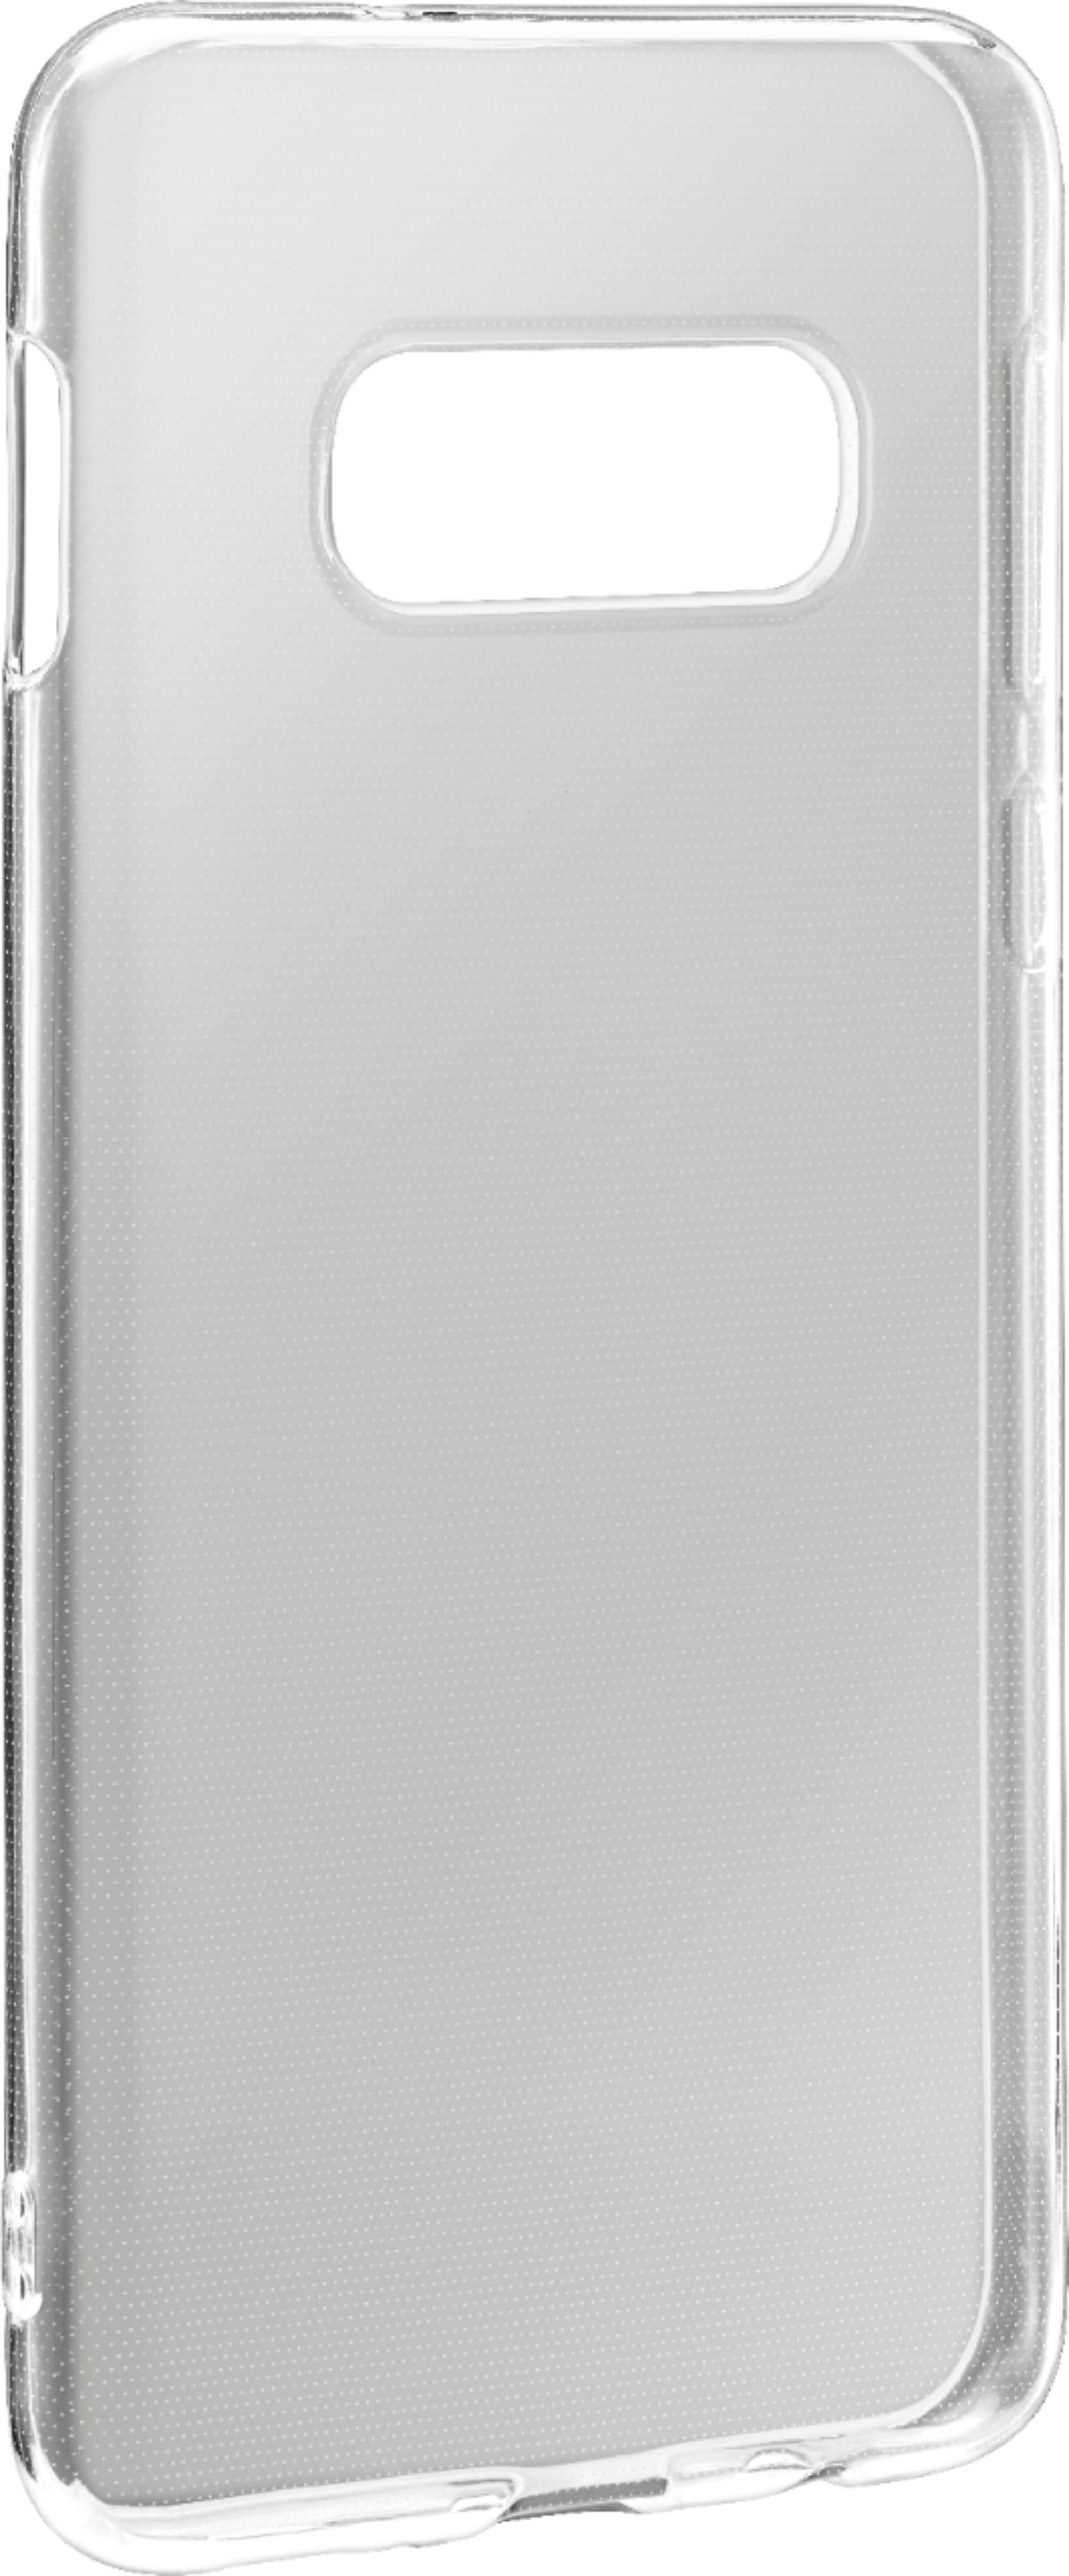 Angle View: Dynex™ - Case for Samsung Galaxy S10e - Transparent